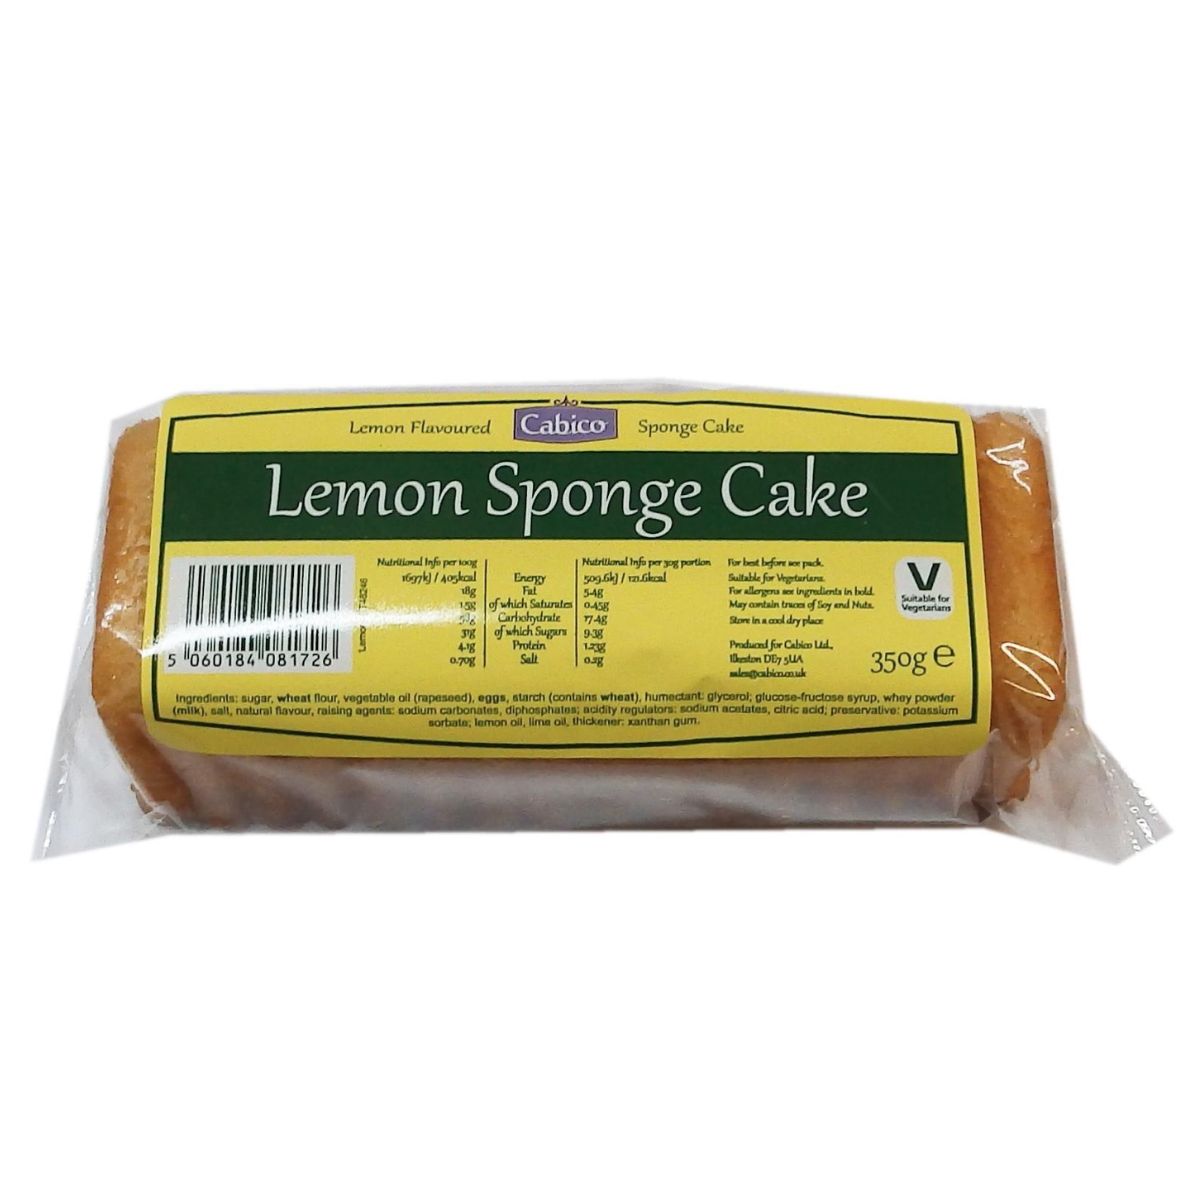 A package of Lemon - Sponge Cake - 350g on a white background.